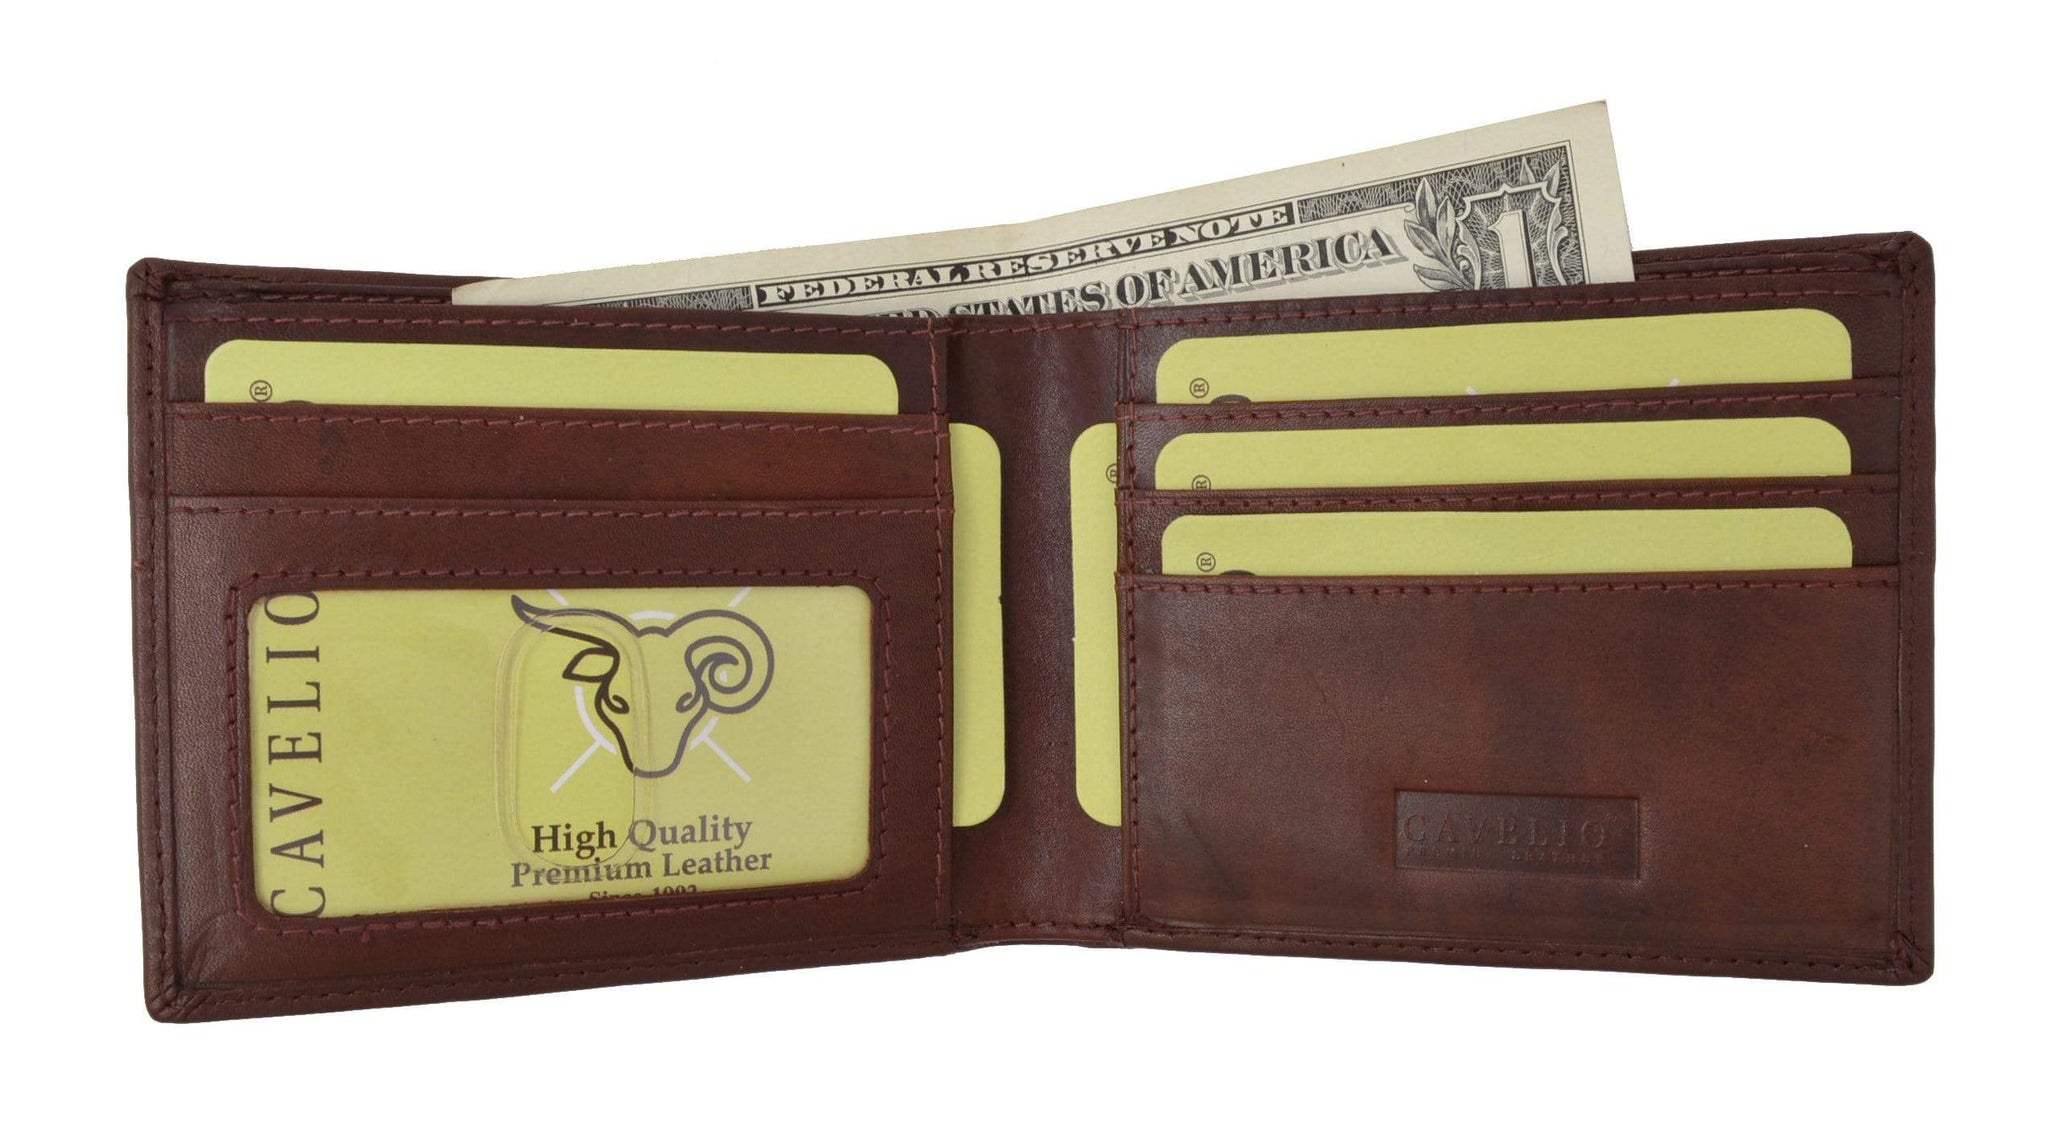 Original Guess Pebble Leather Slim Billfold Classic Men's Wallet